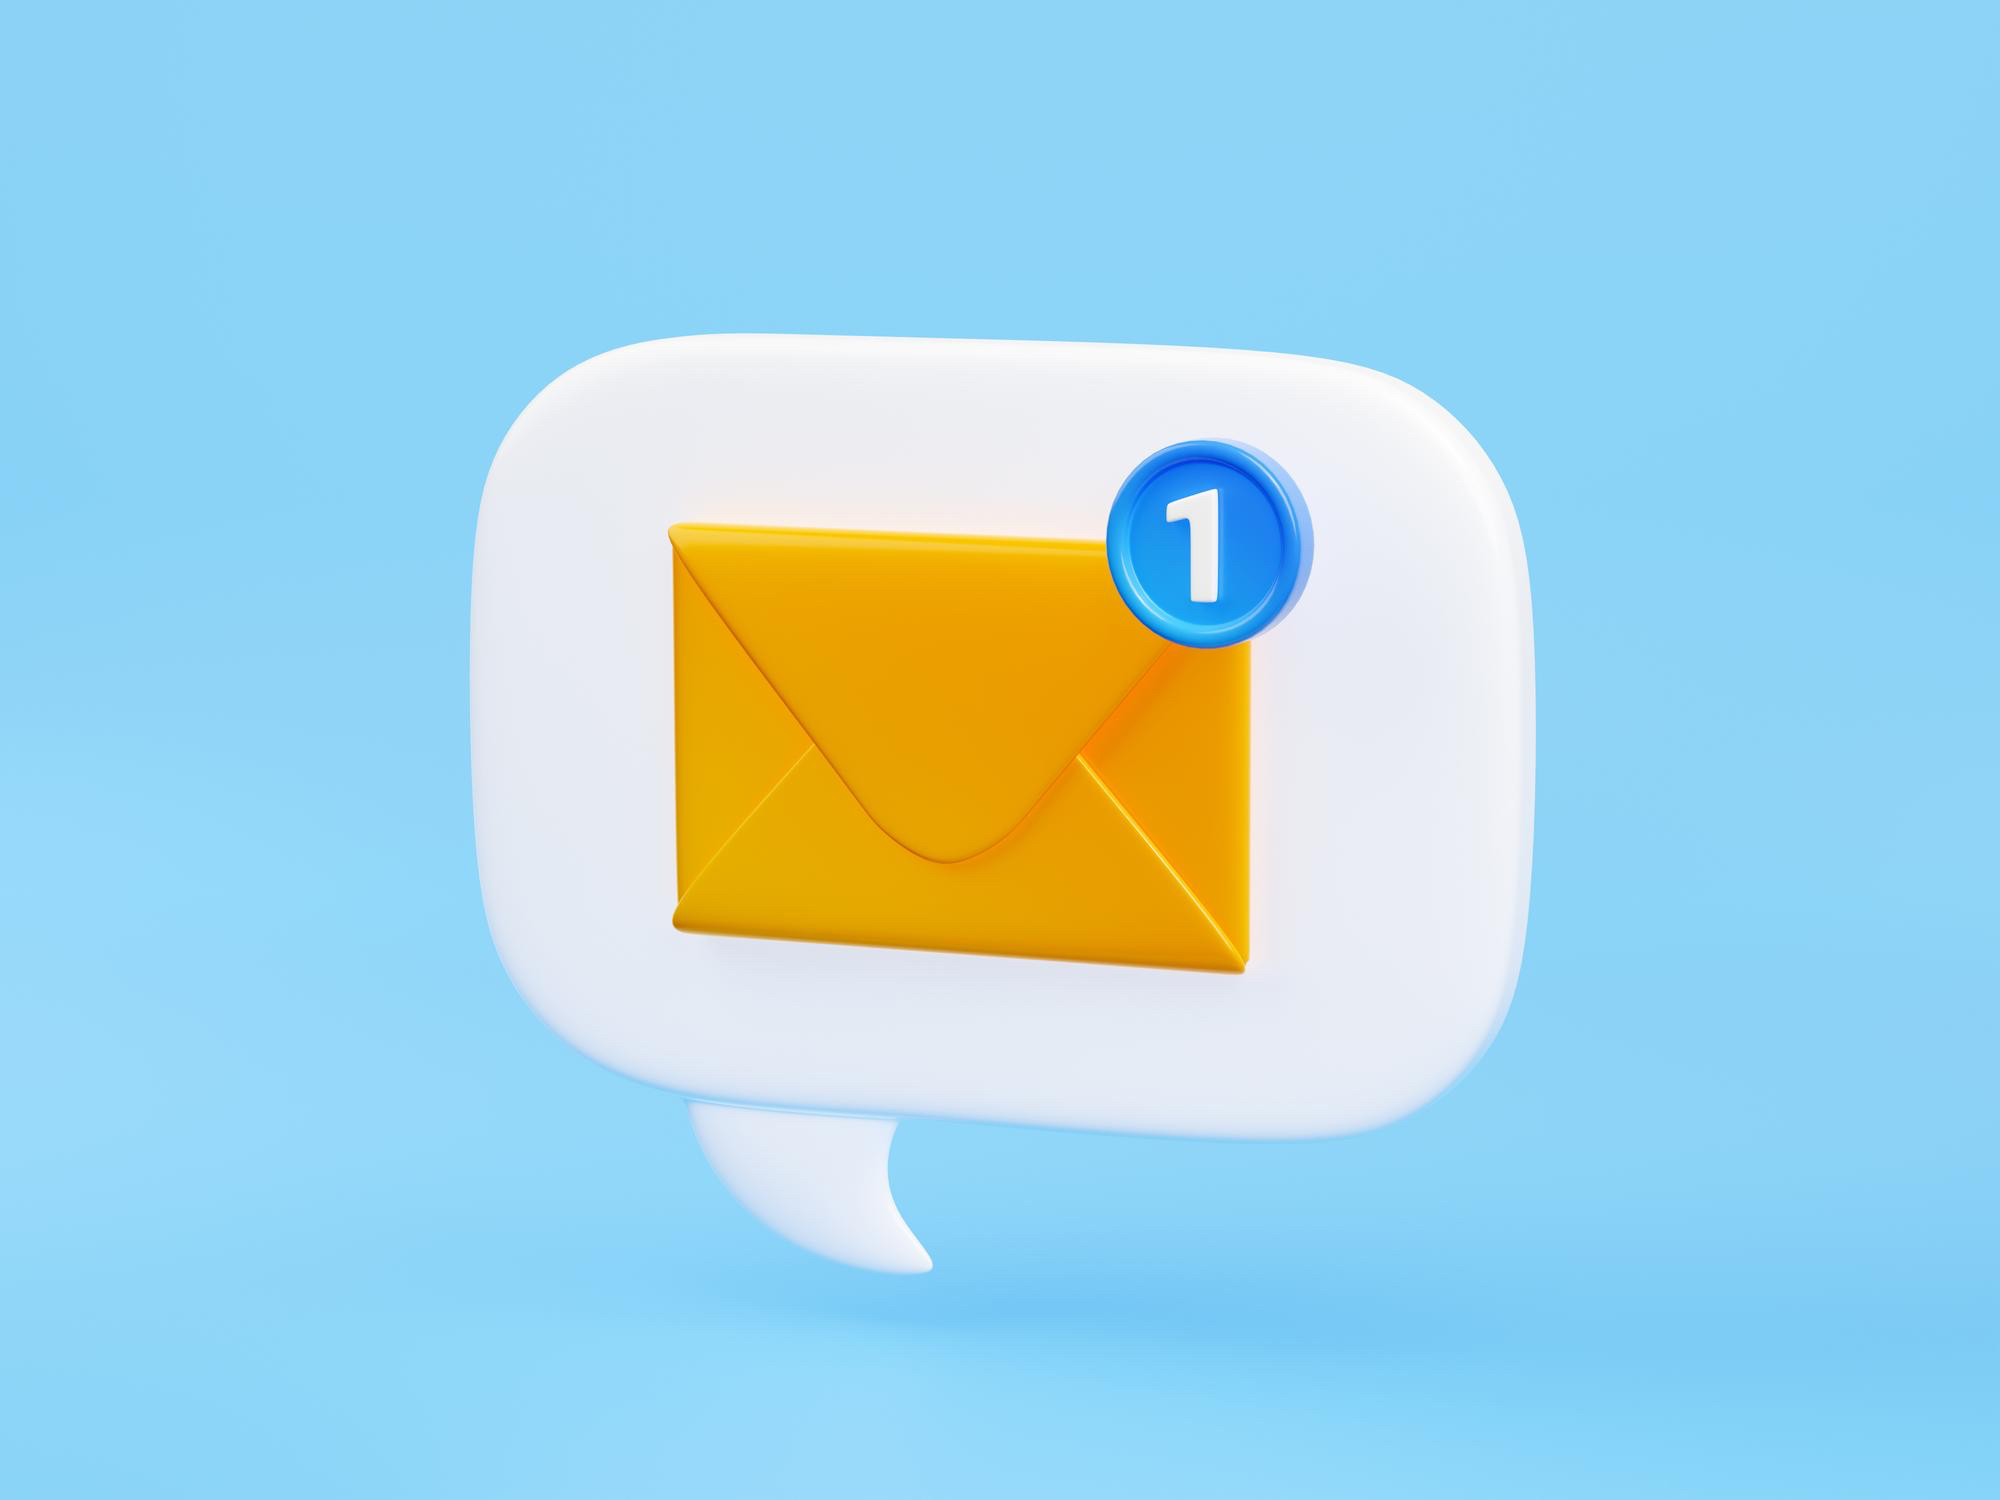 3d-render-email-message-newsletter-notification